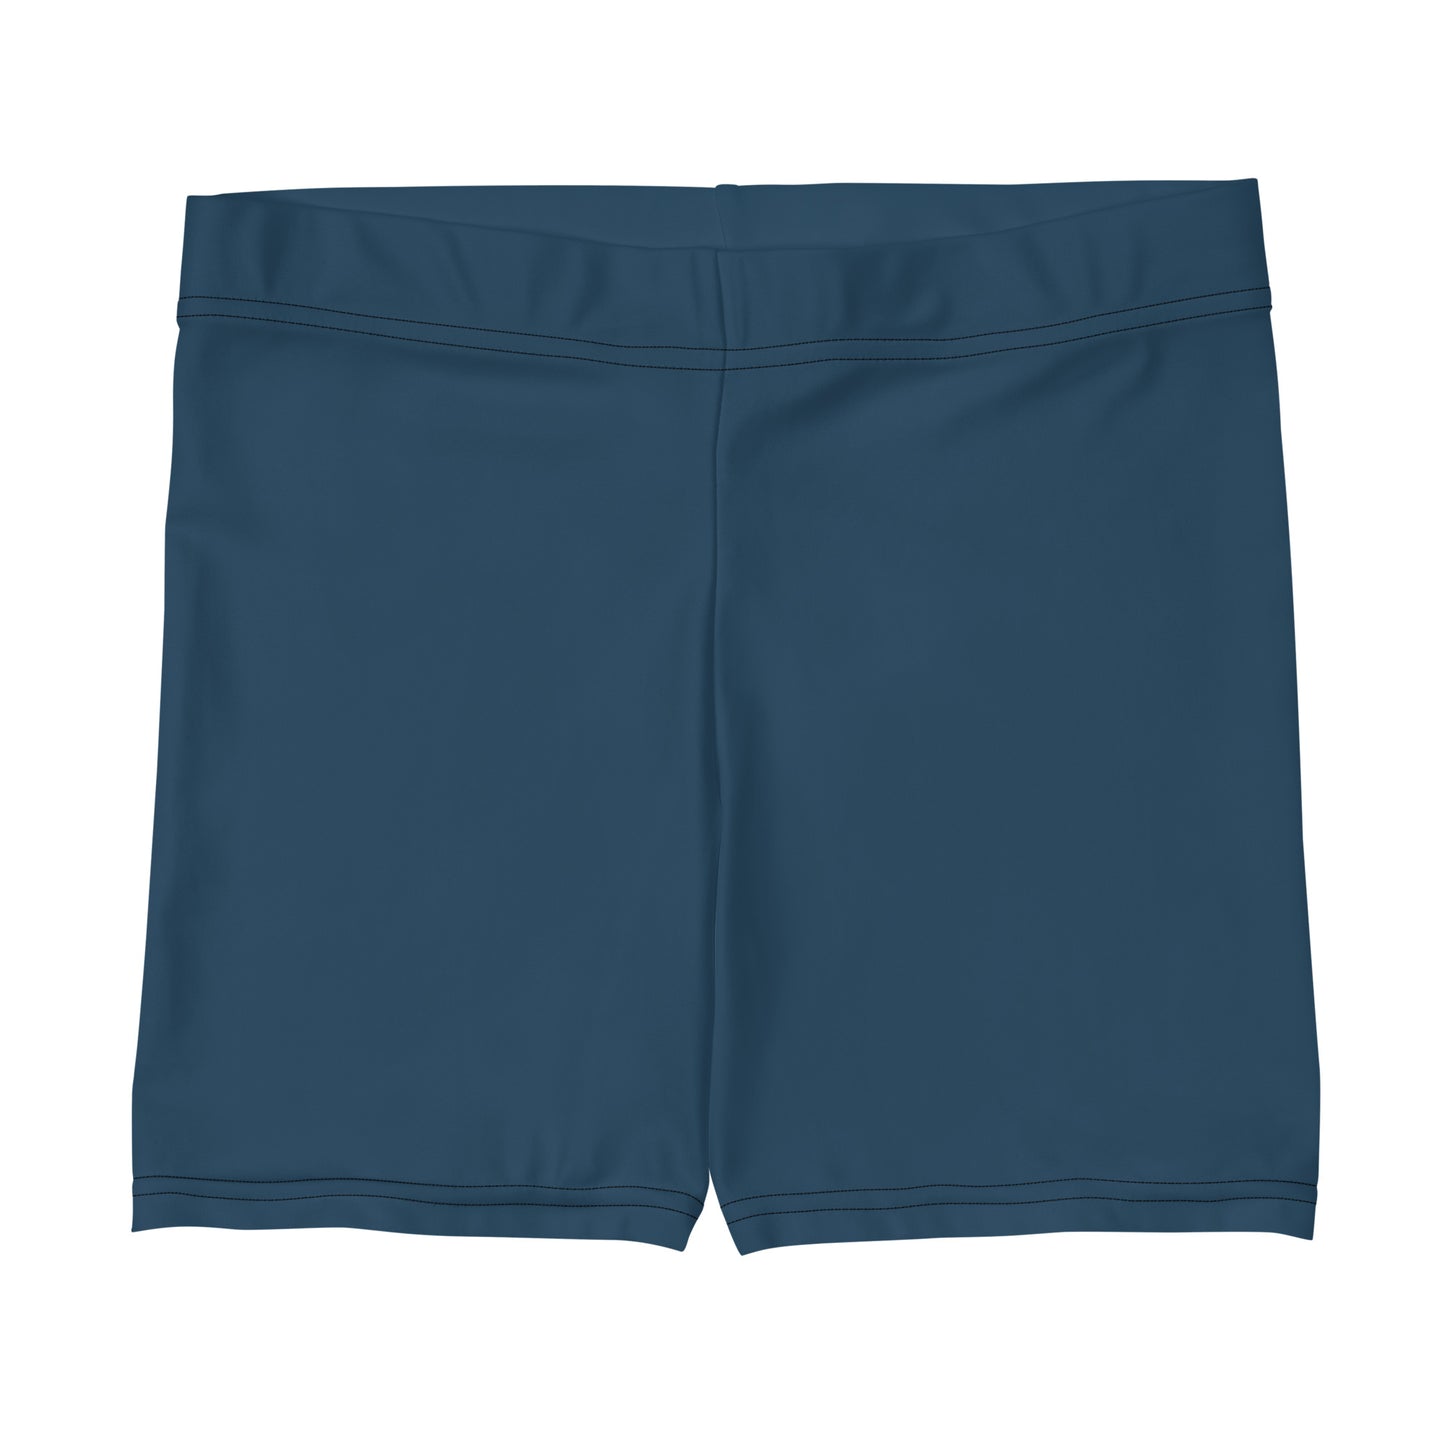 Athlete Spandex Shorts - Blue